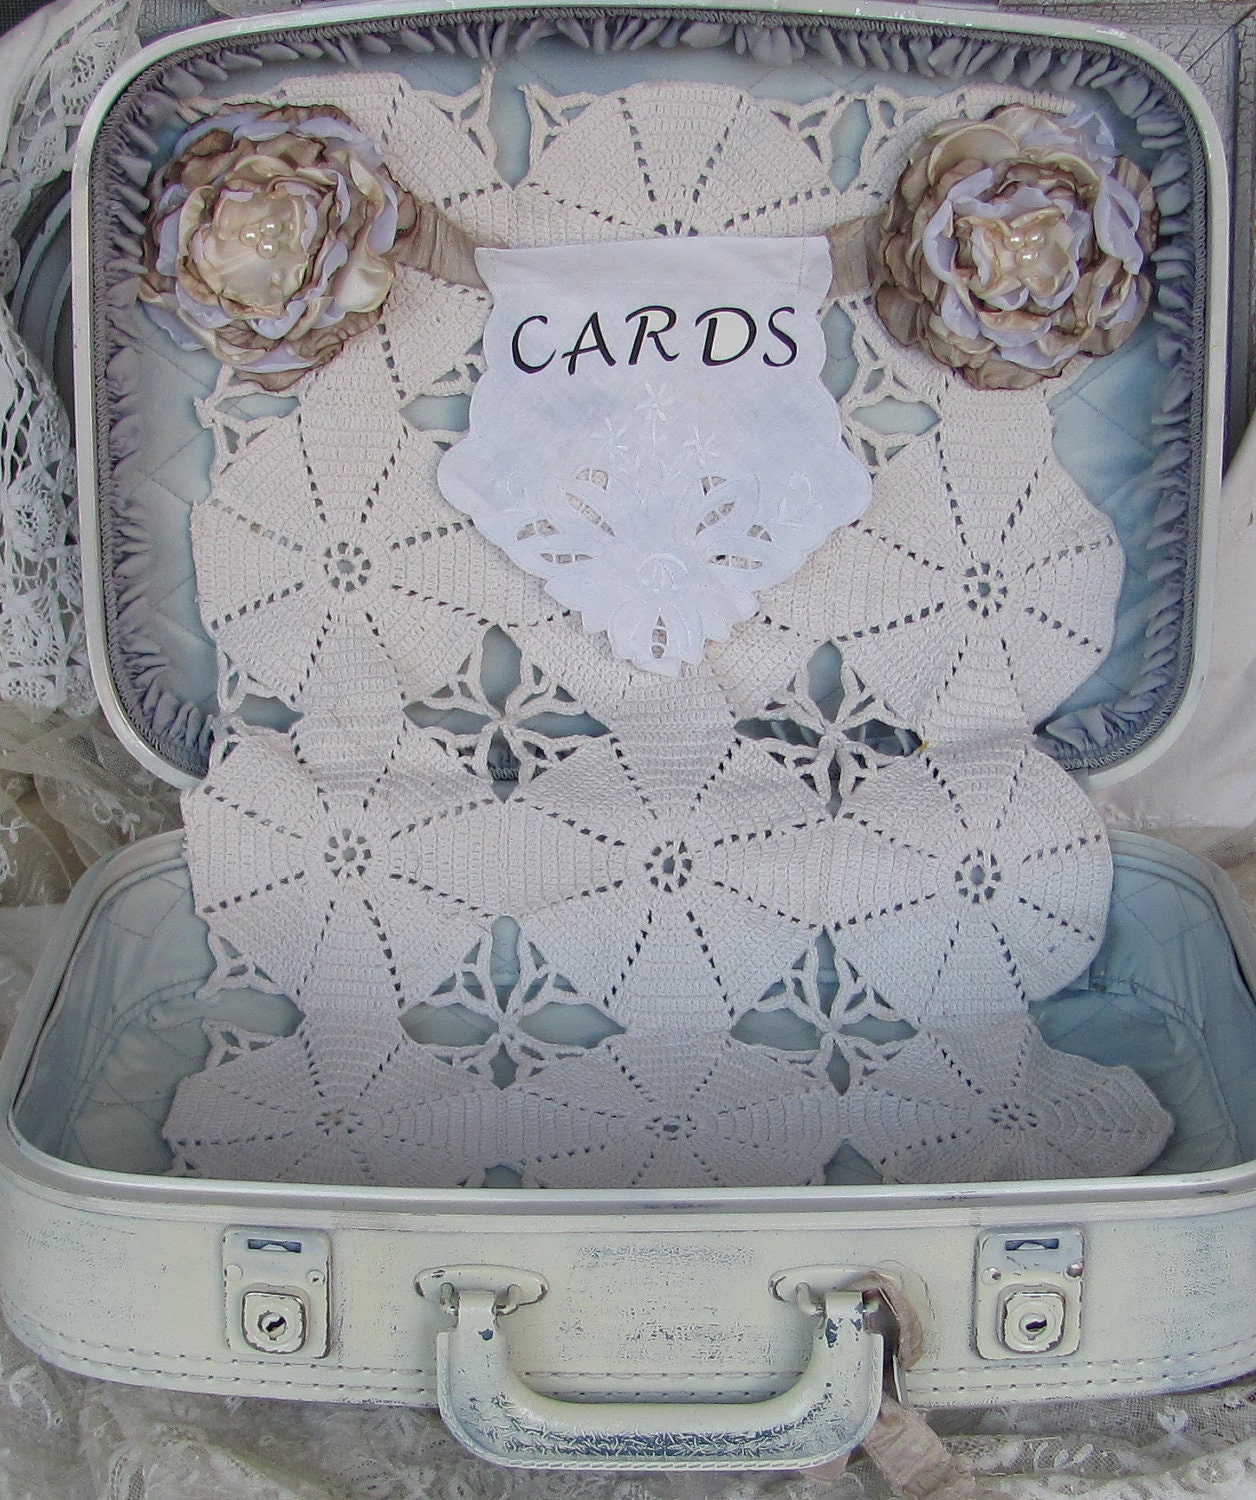 Vintage Suitcase Wedding Card Holder by My Broken Art on Etsy